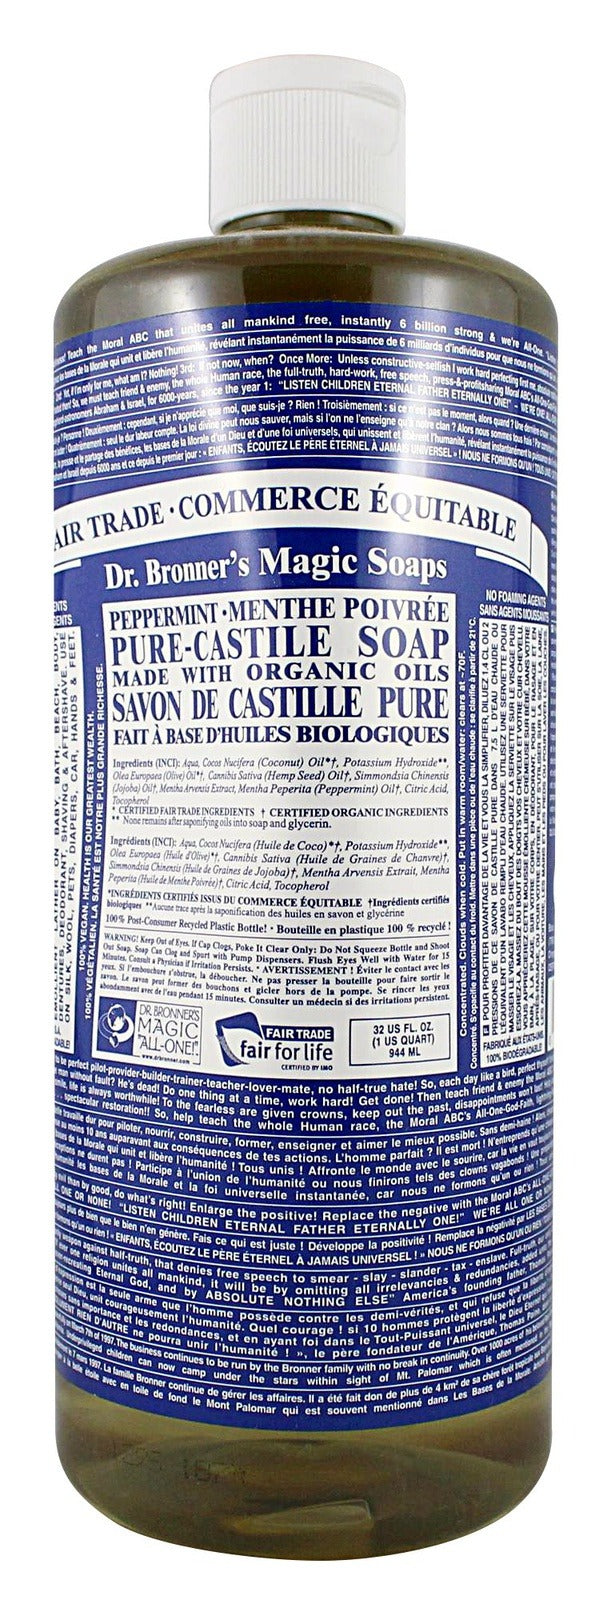 Dr. Bronner's 18-in-1 Pure-Castile Soap - Hemp Peppermint Image 5